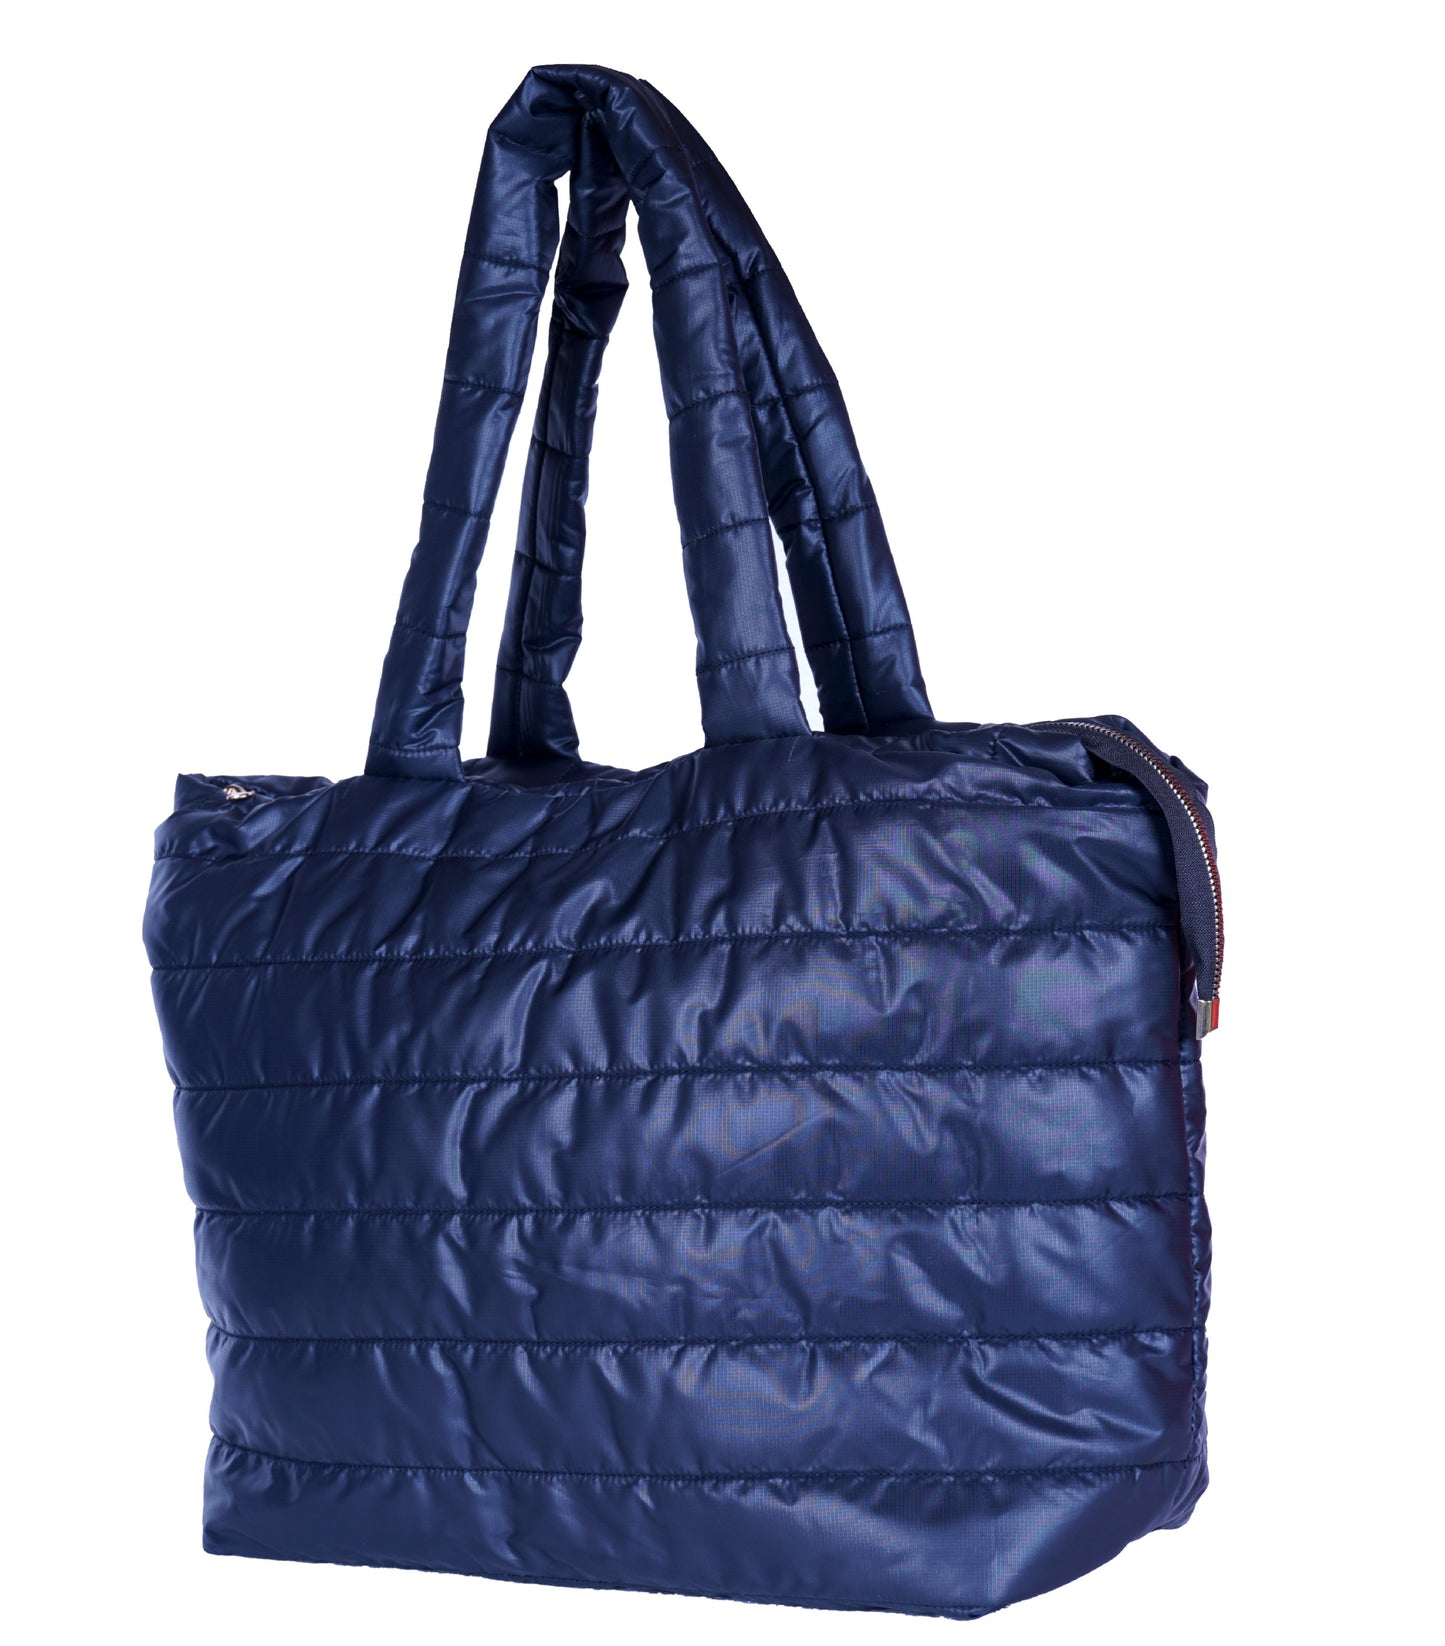 Sapphire Blue Bag